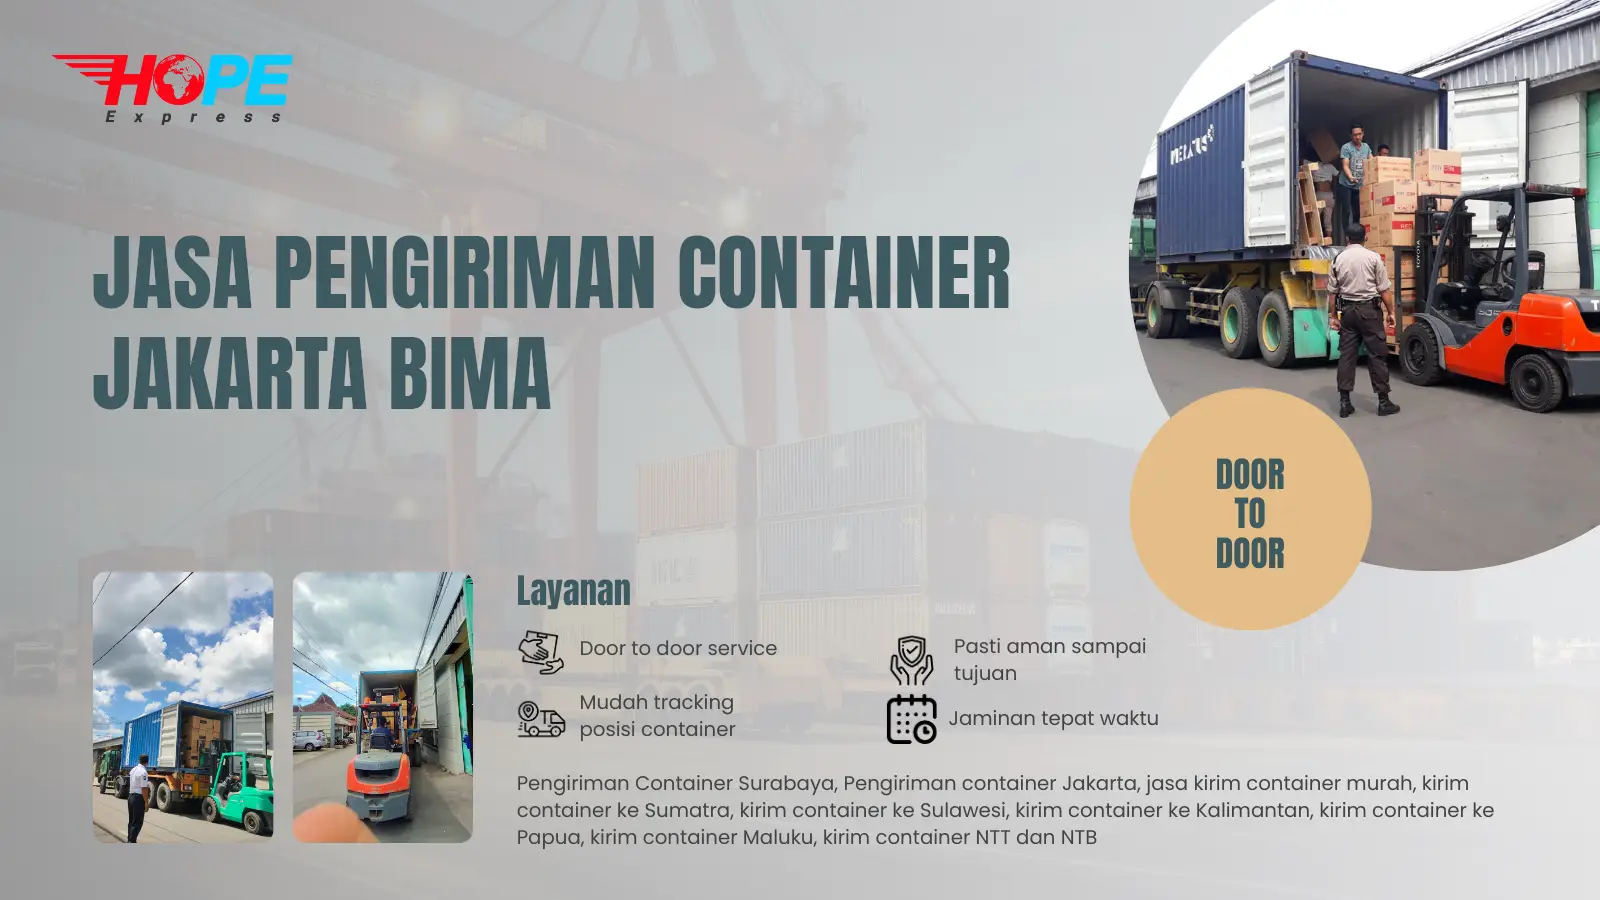 Jasa Pengiriman Container Jakarta Bima